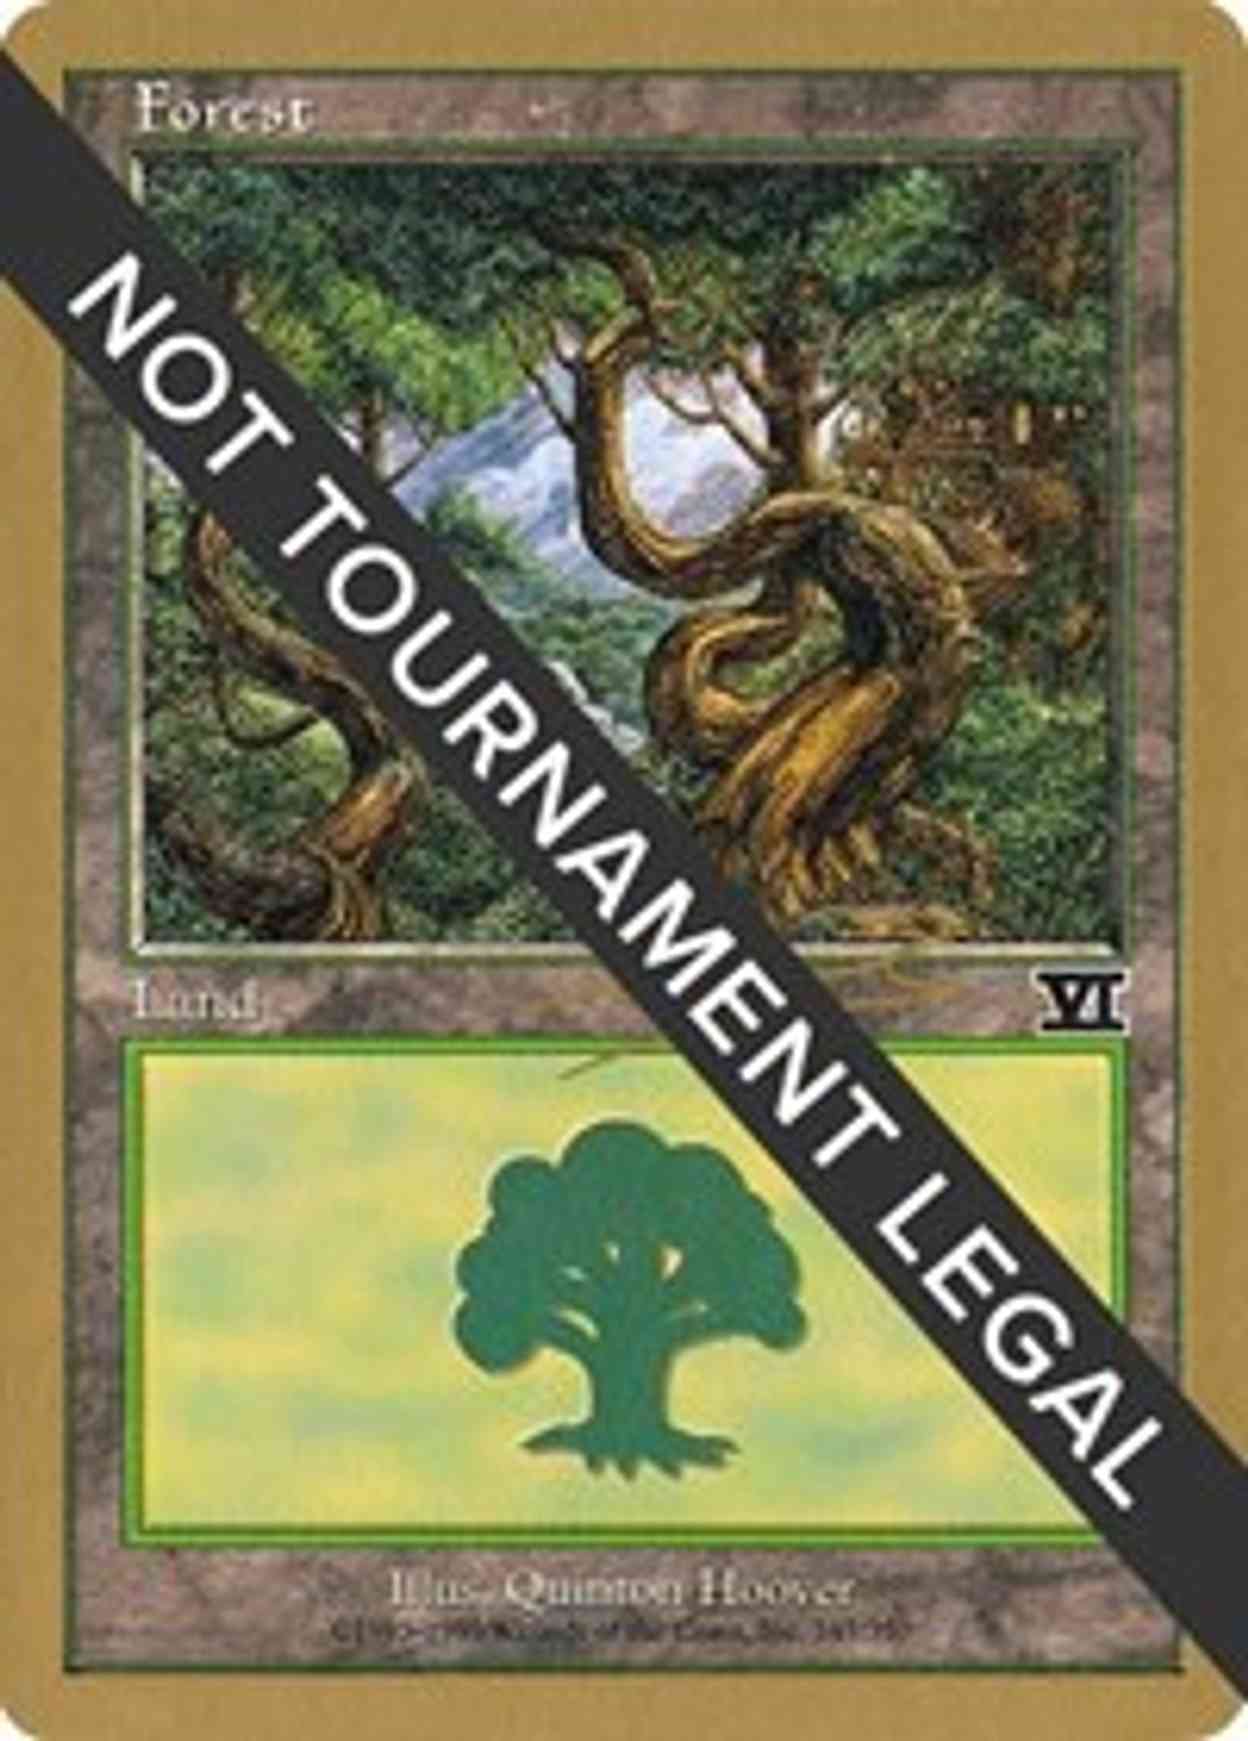 Forest (347) - 2000 Nicolas Labarre (6ED) magic card front